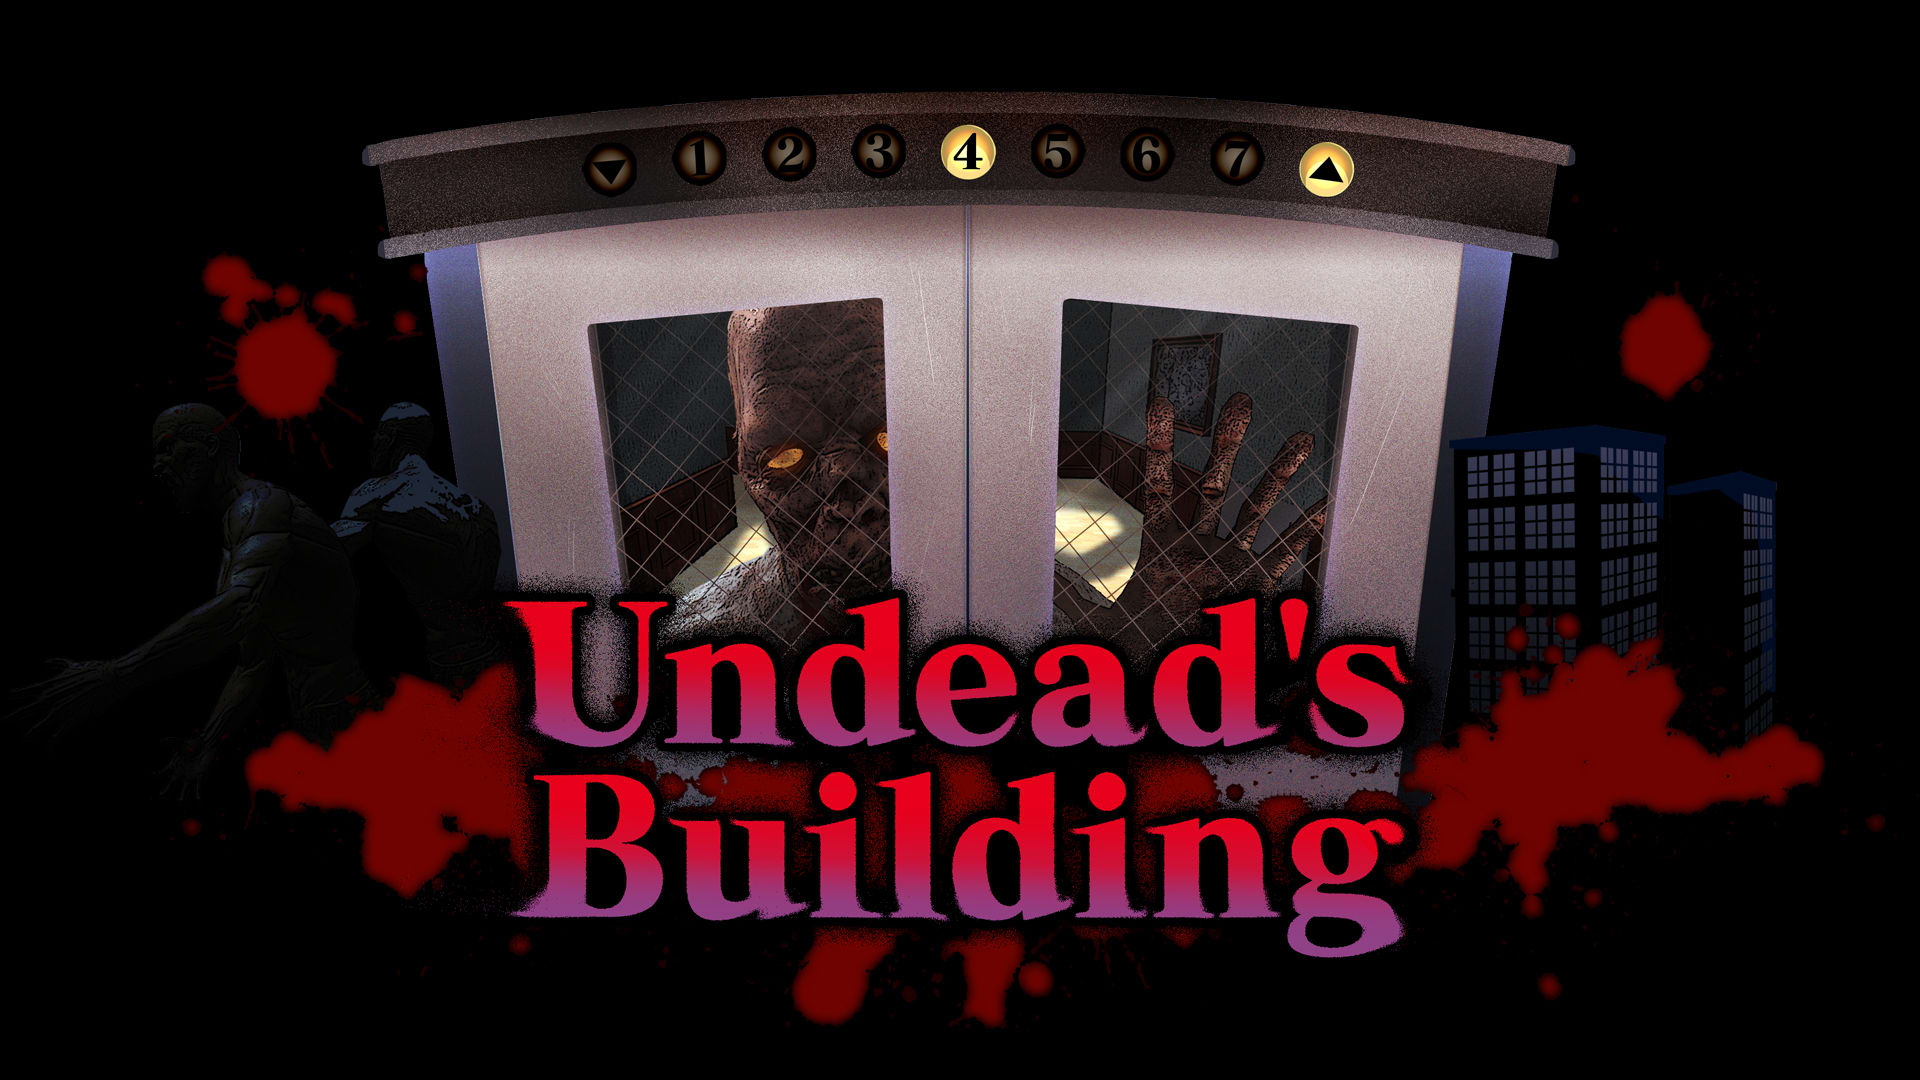 Undead's Building